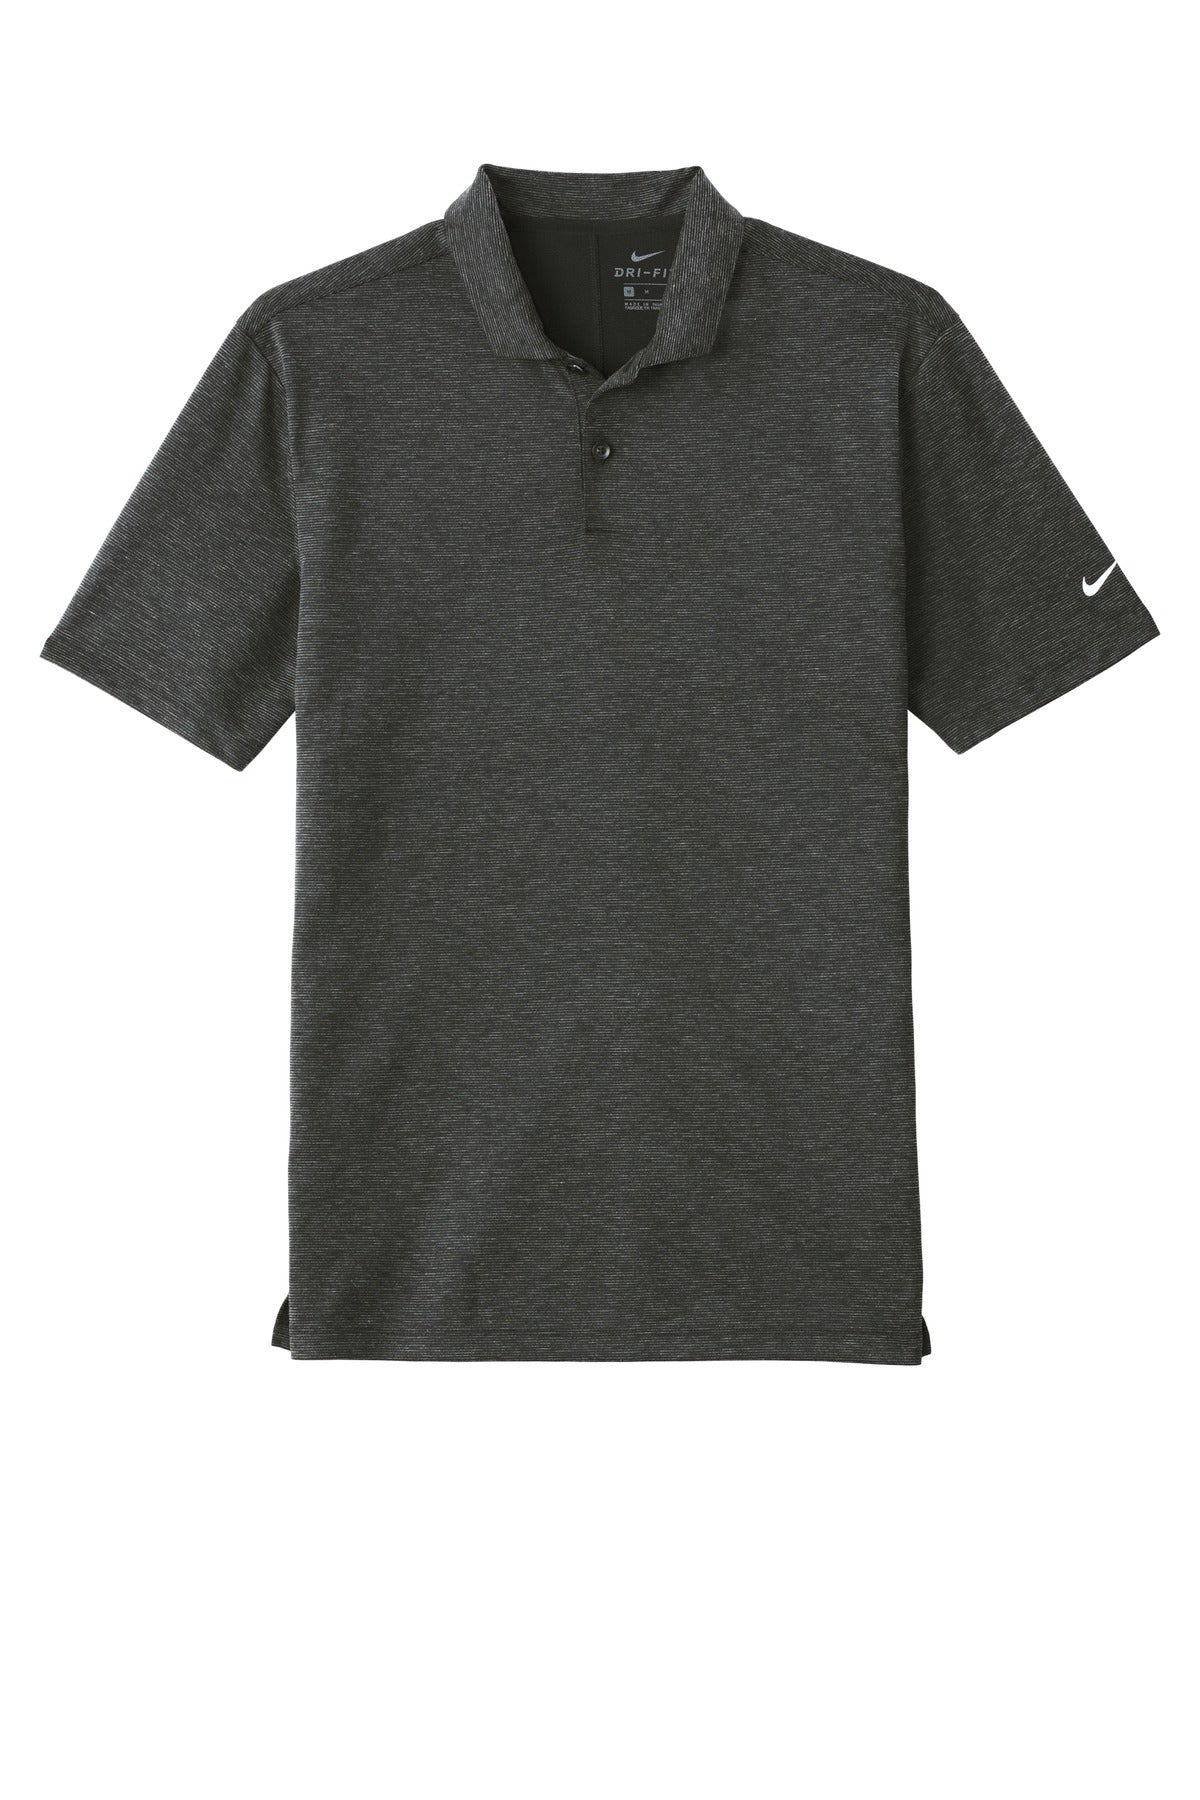 Nike Dri-FIT Prime Polo. NKAA1854 - BT Imprintables Shirts